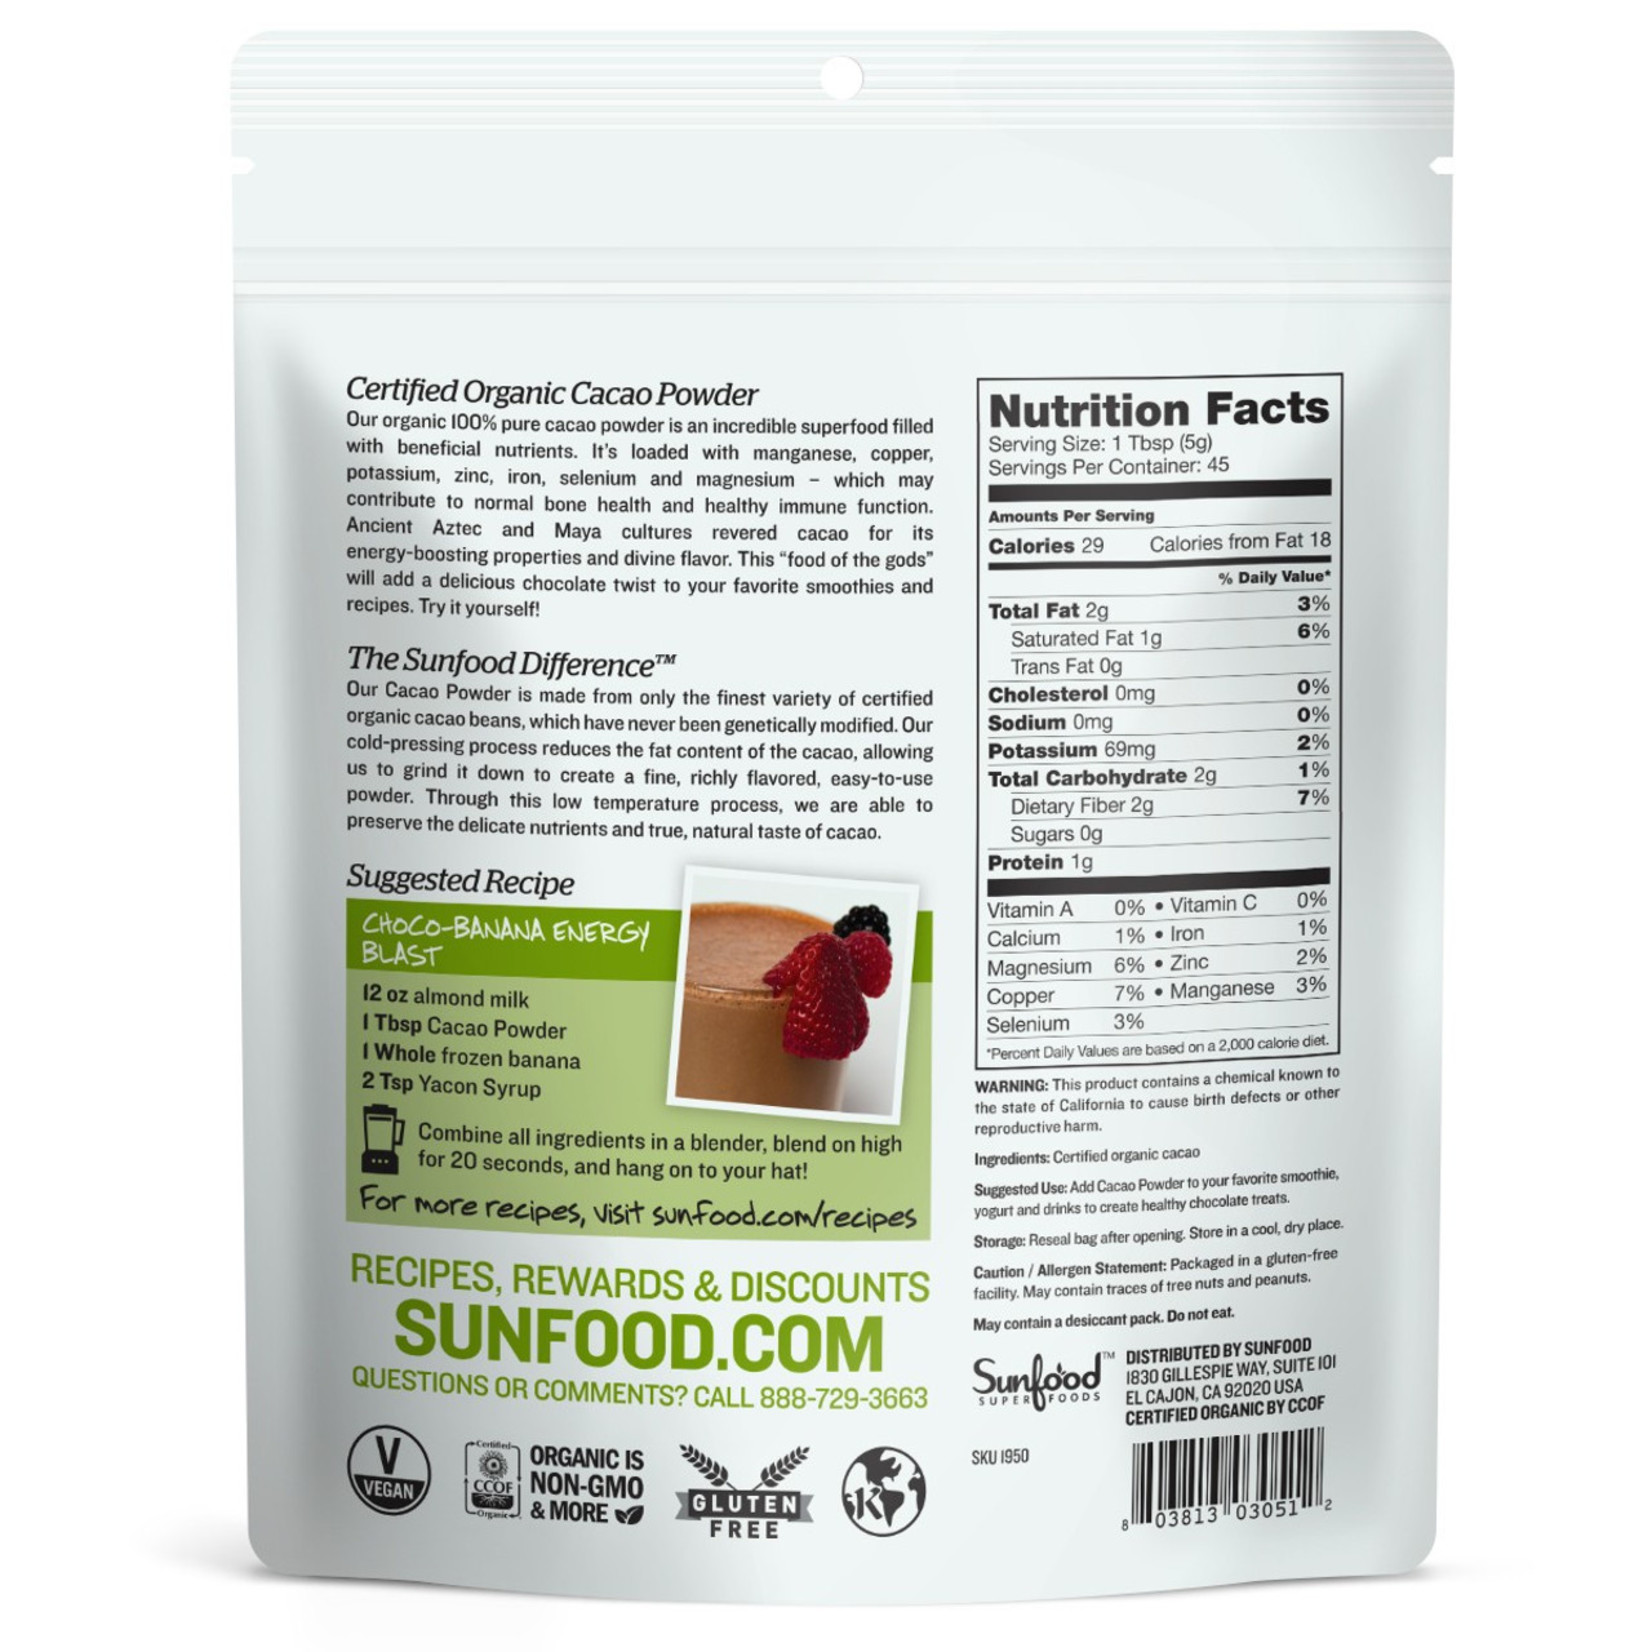 Sunfood Sunfood - Organic Cacao Powder - 8 oz